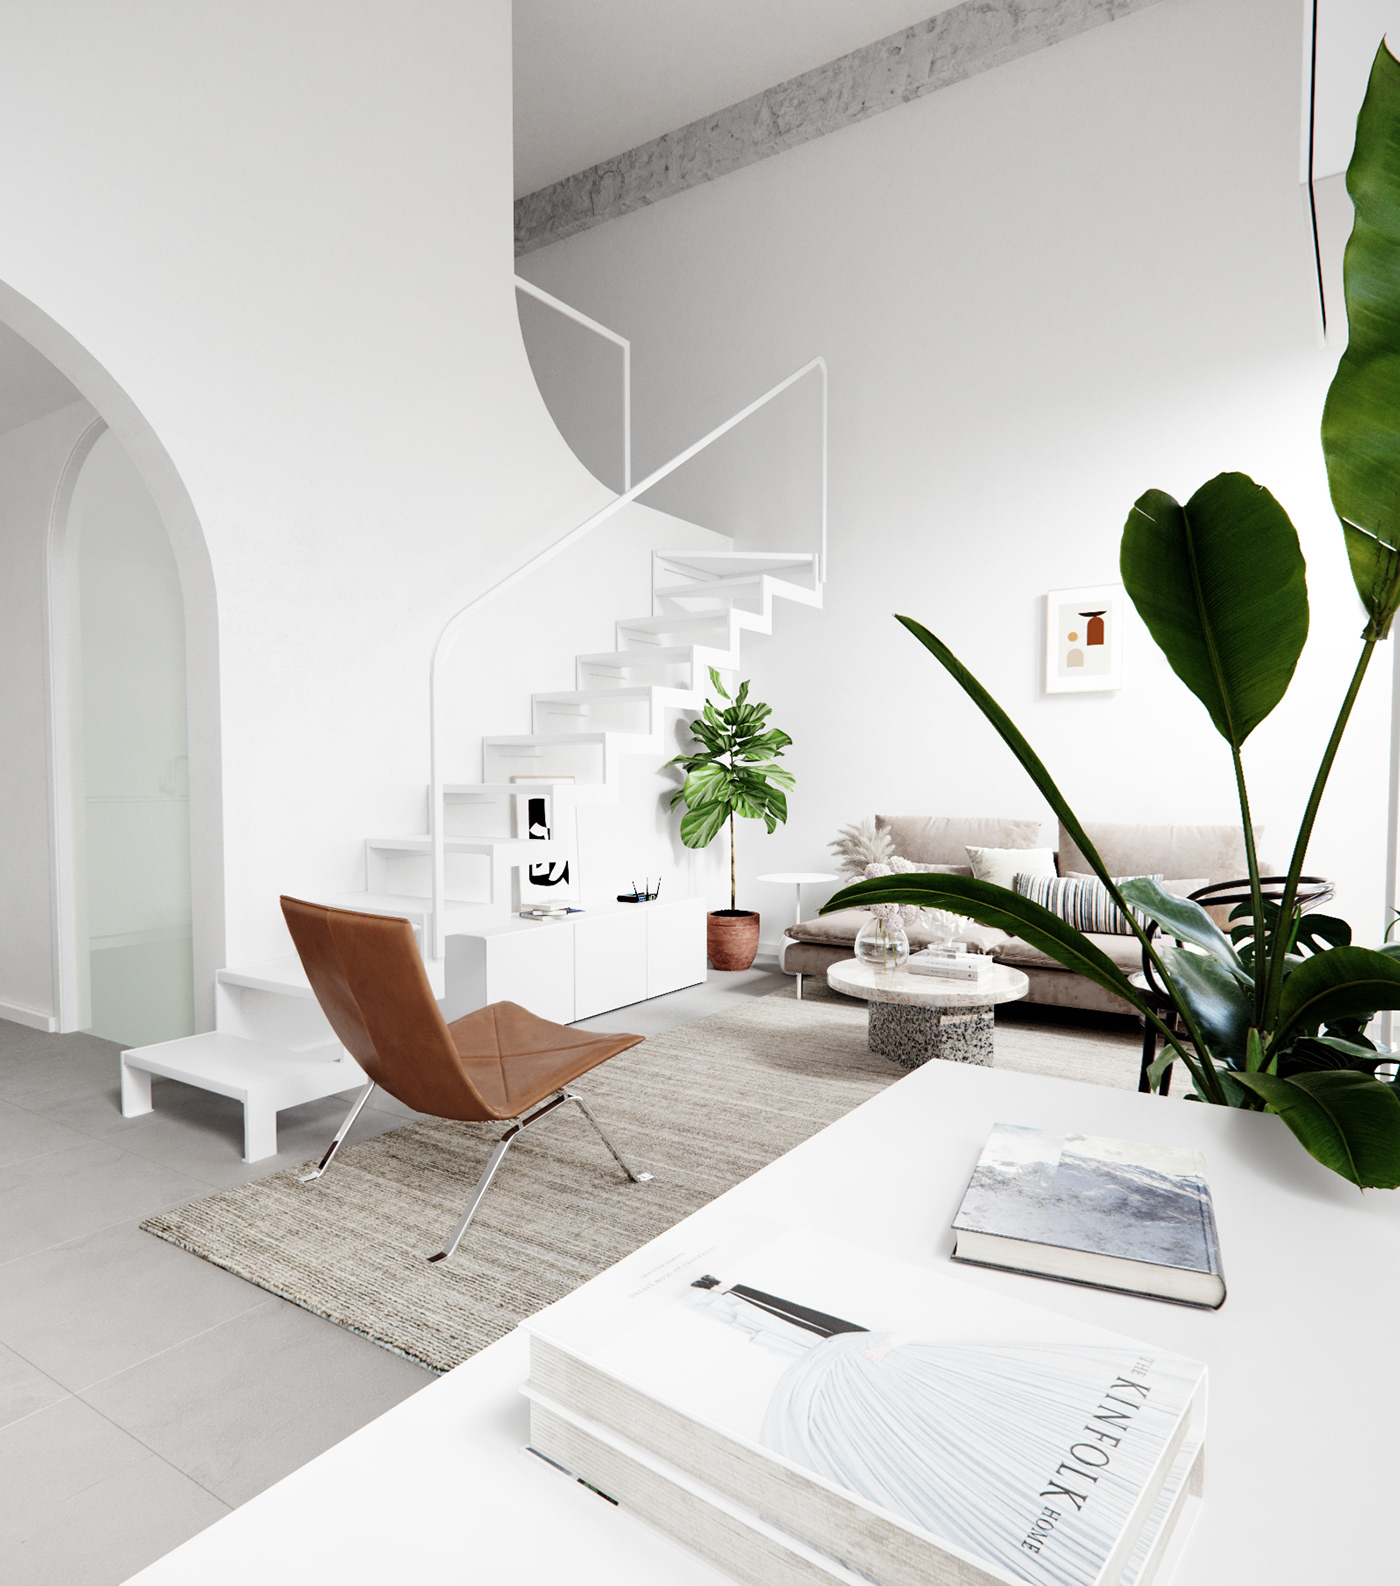 Interior rendering corona visualisation siting kitchen dining minimal Scandinavian calm